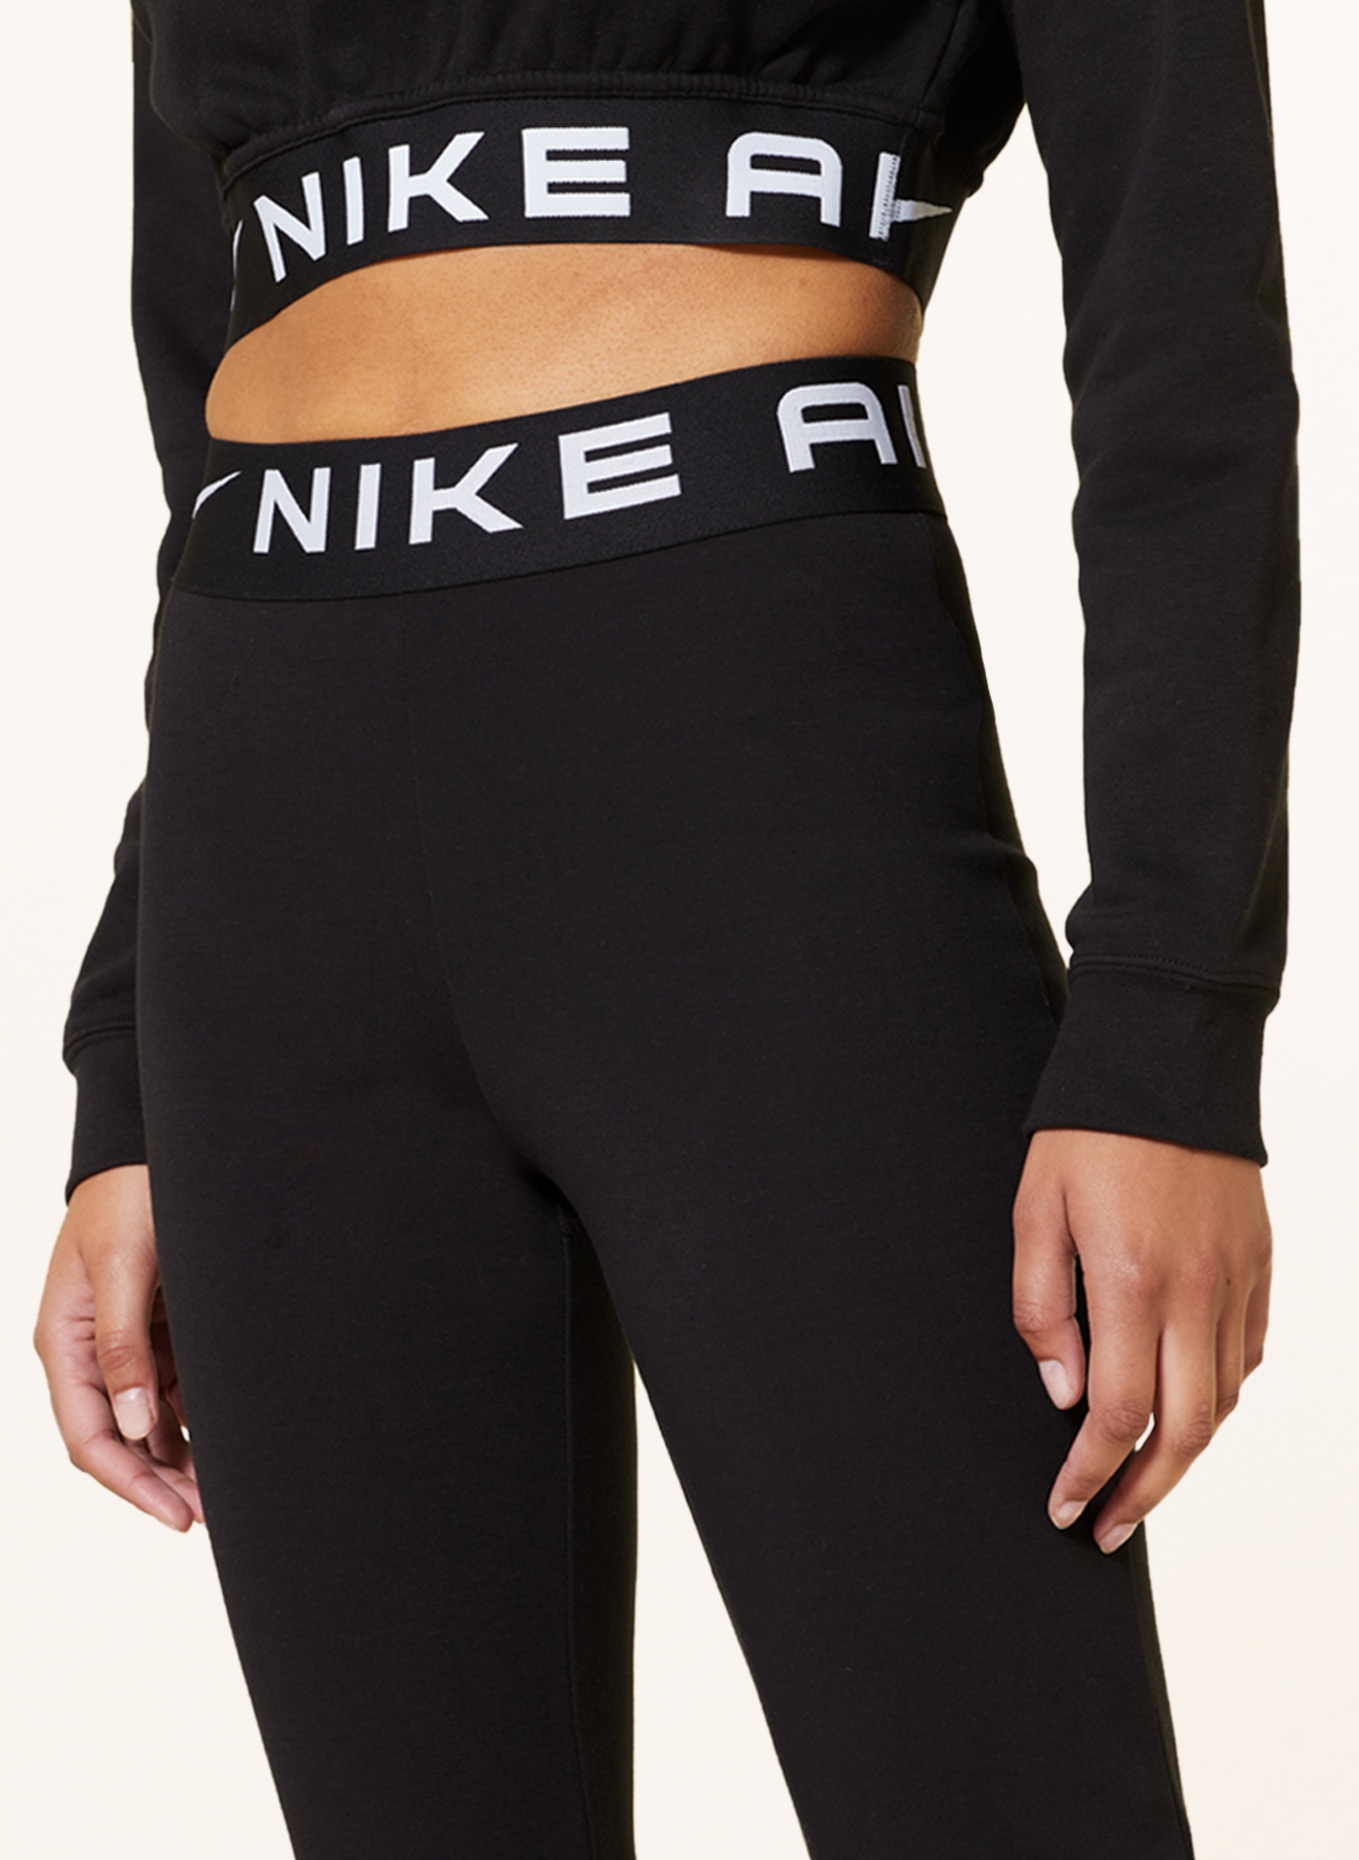 Nike Air Sportswear black leggings